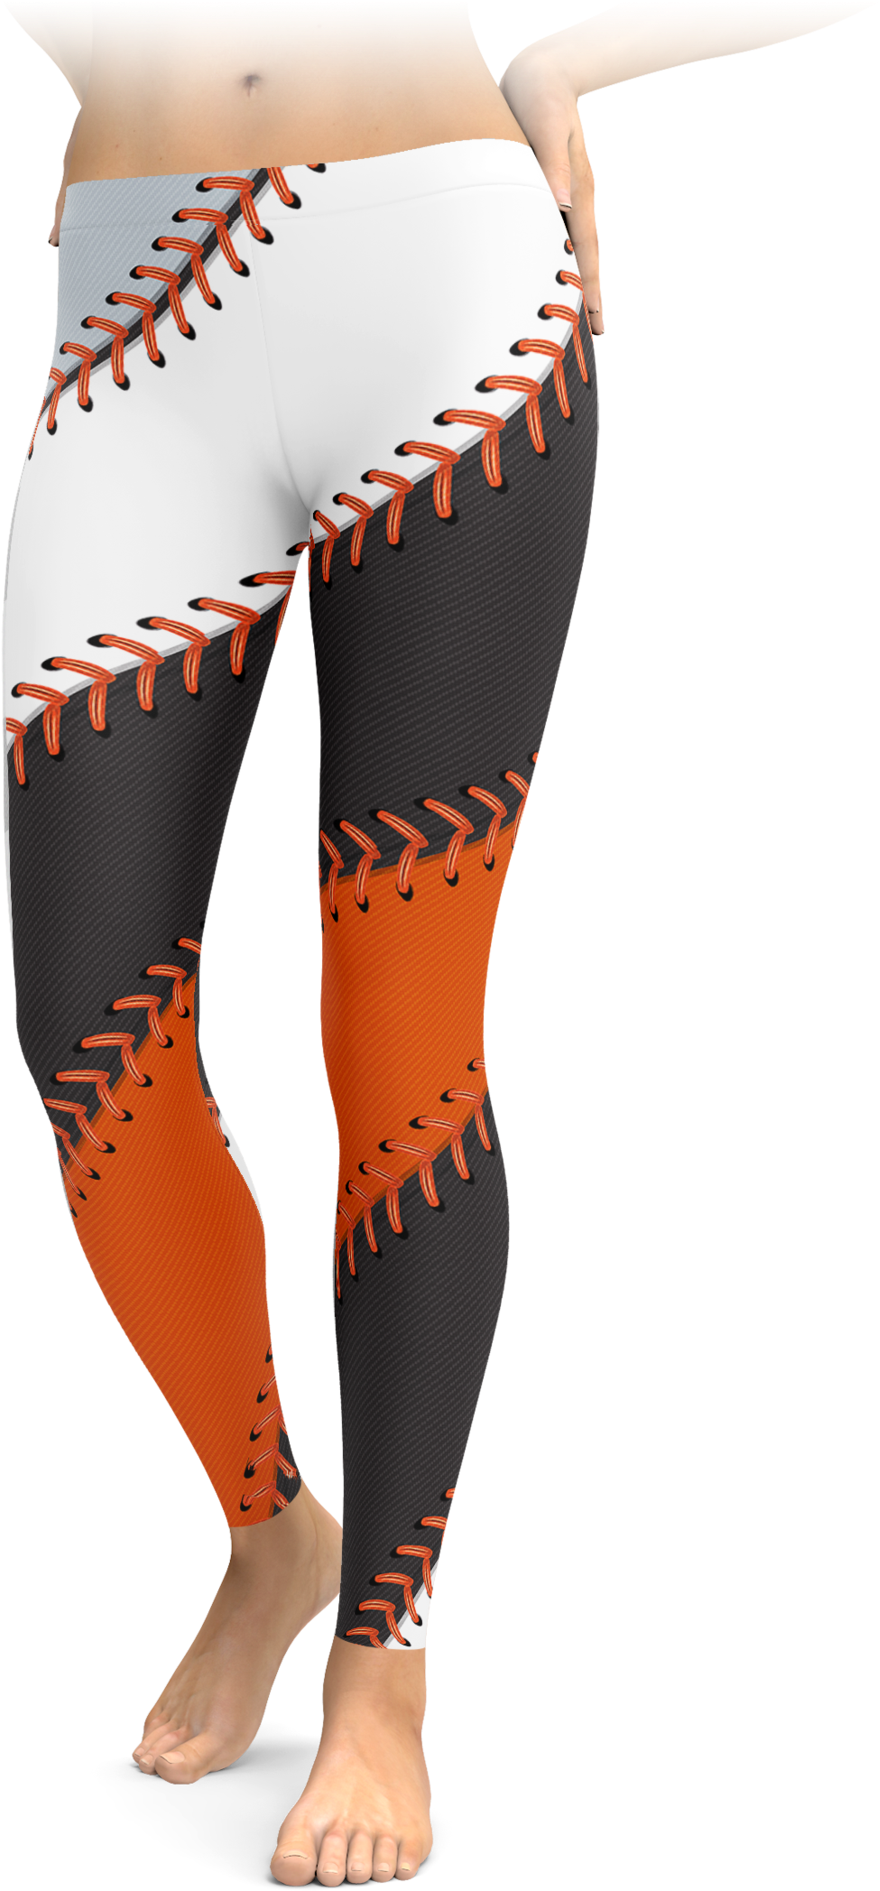 A Leggings With A Baseball Design